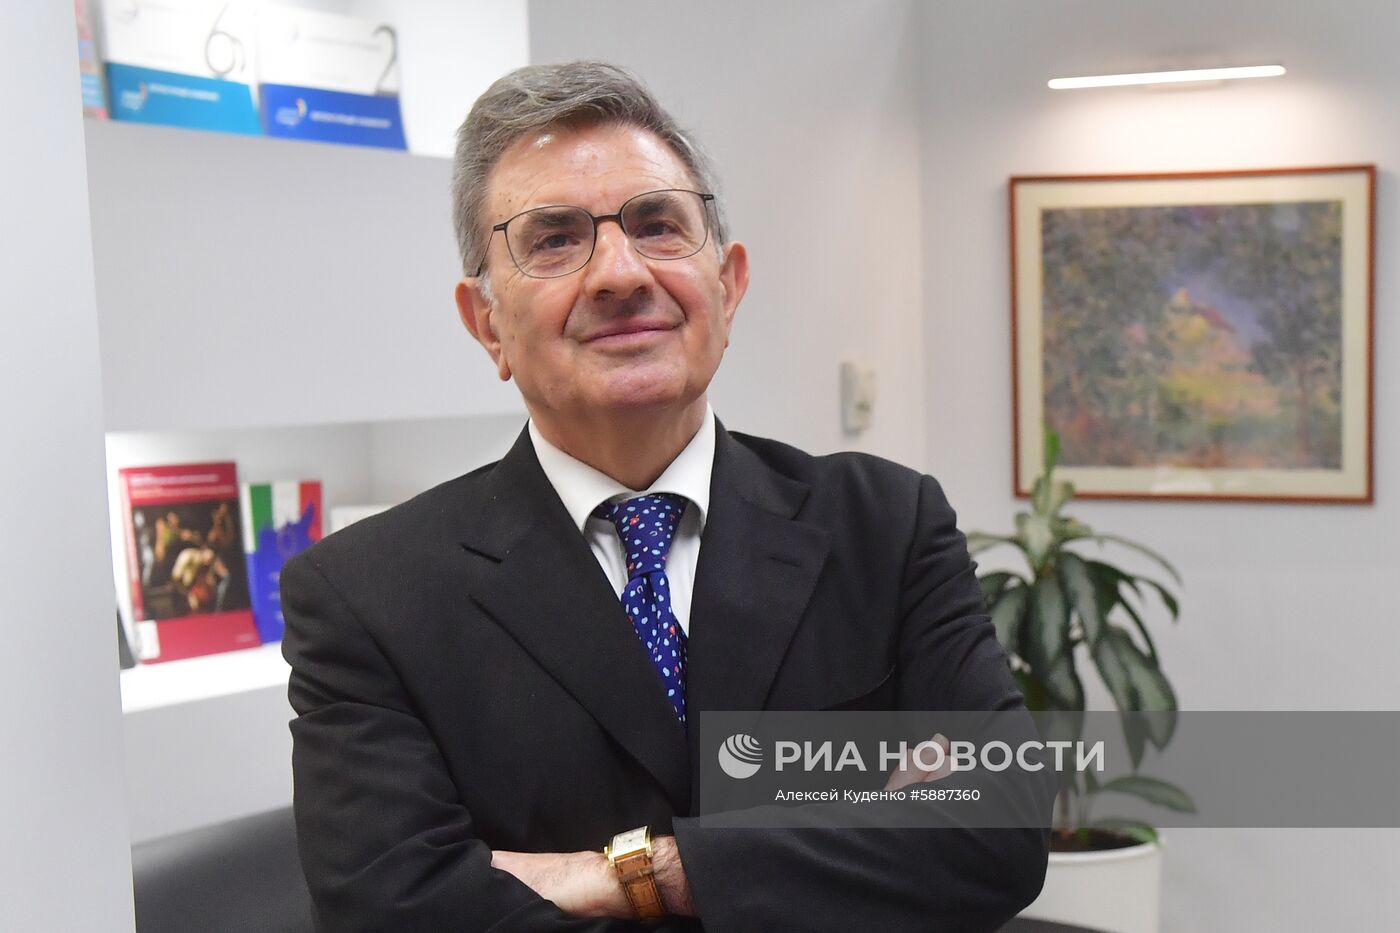 Председатель совета директоров АО "Банк Интеза" Антонио Фаллико